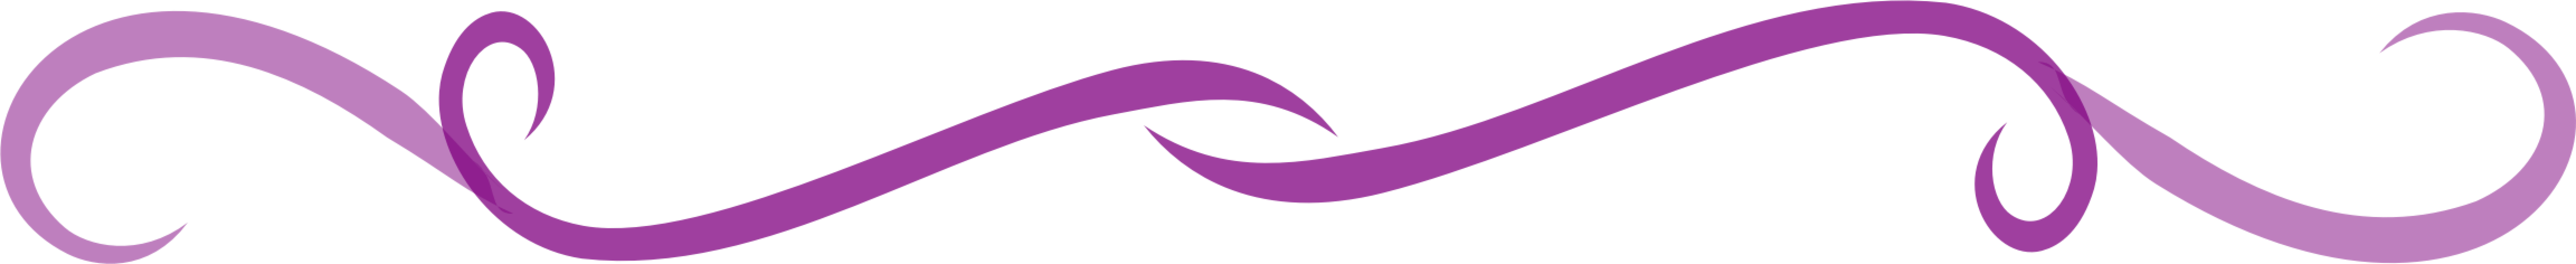 kisscc0-computer-icons-download-purple-red-purple-divider-5b75741c08ebd3.3212019115344240920366.png